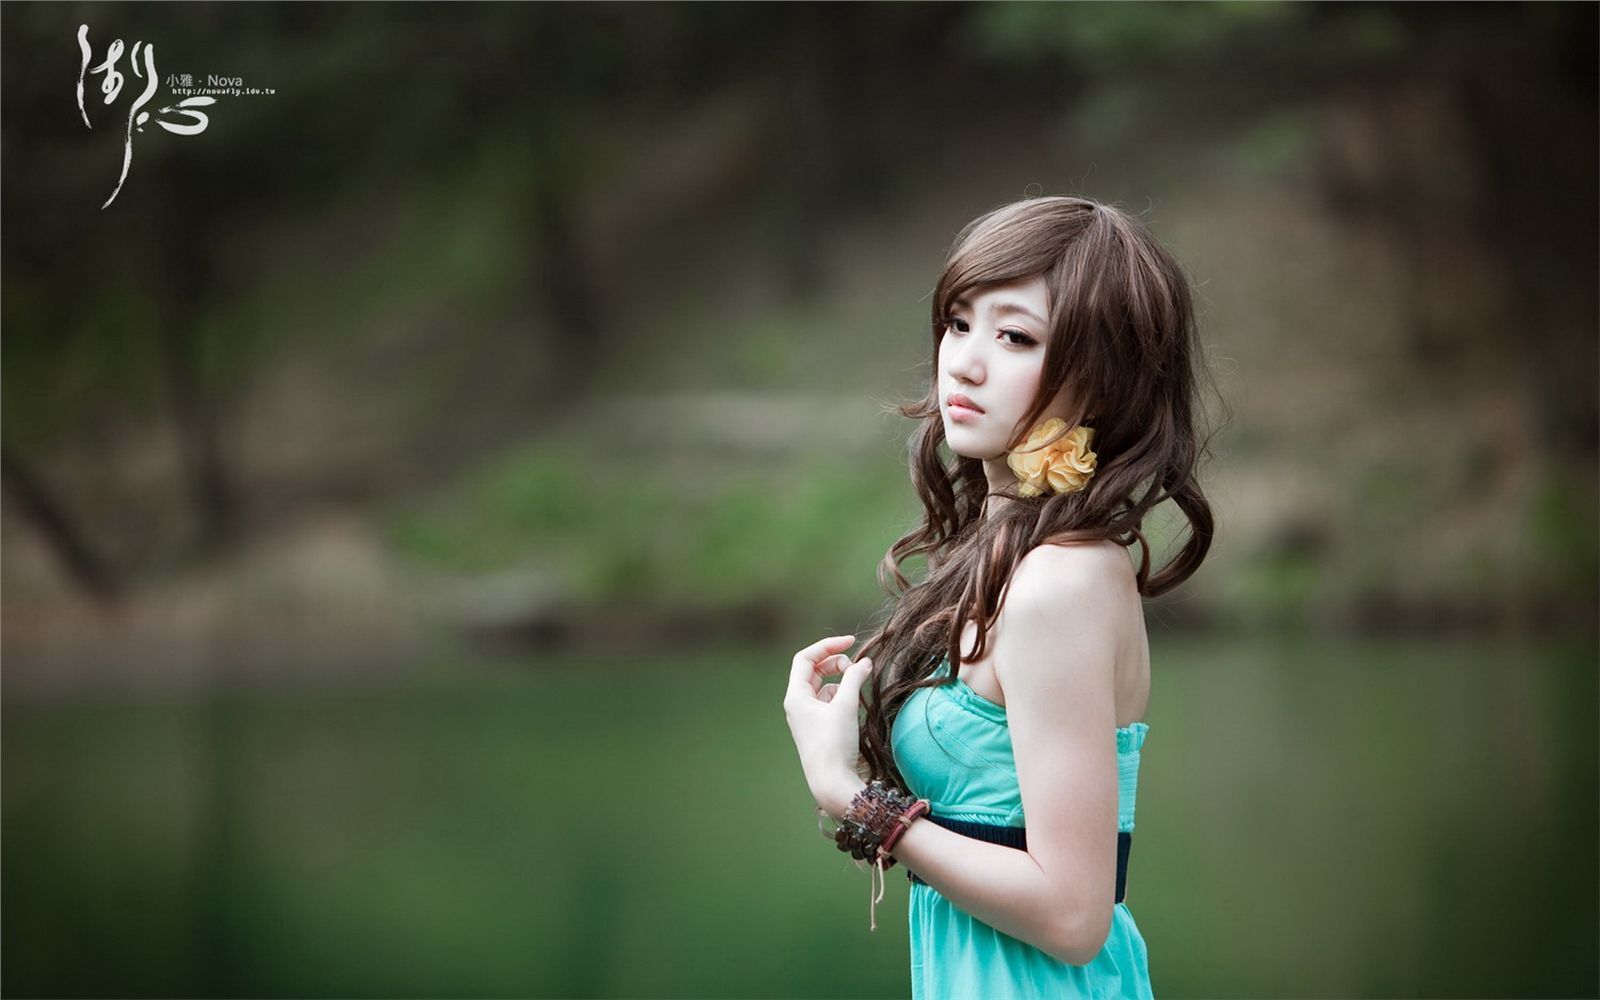 Taiwan Beauty Model Xiaoya takes photos of online beauty models